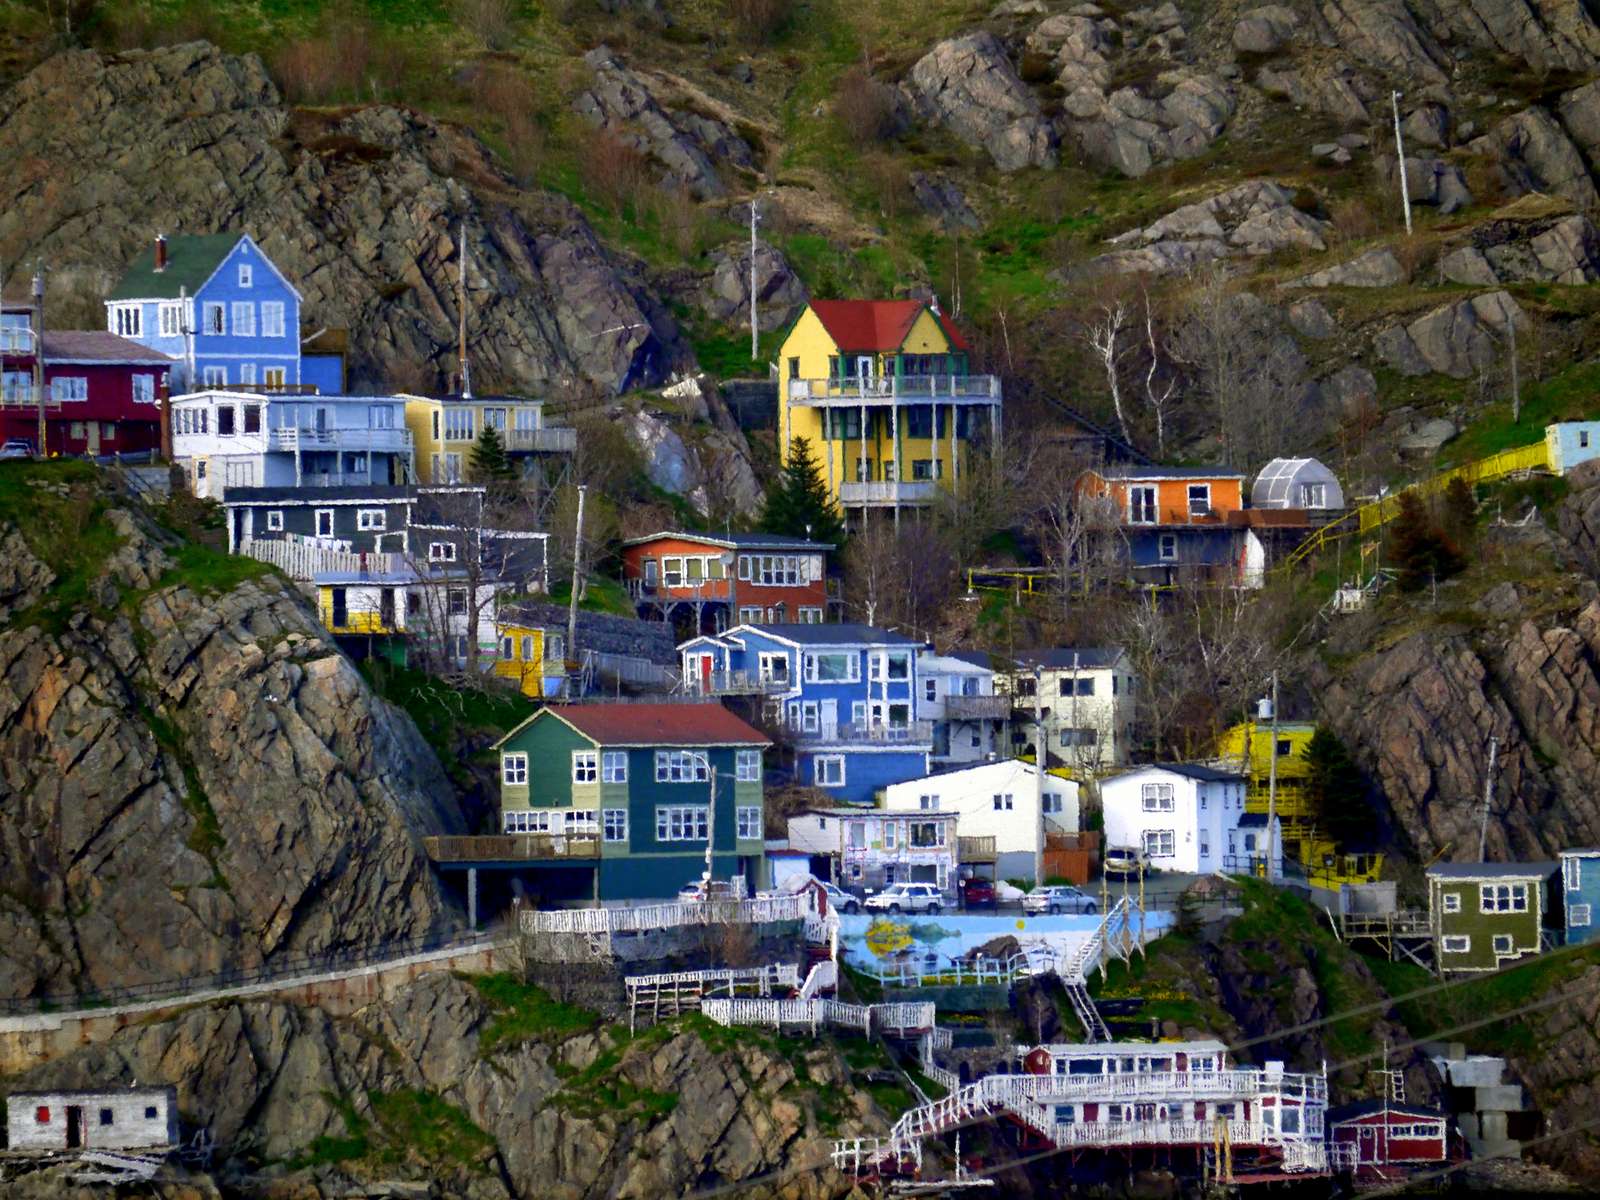 St. John's, Newfoundland and Labrador jigsaw puzzle online